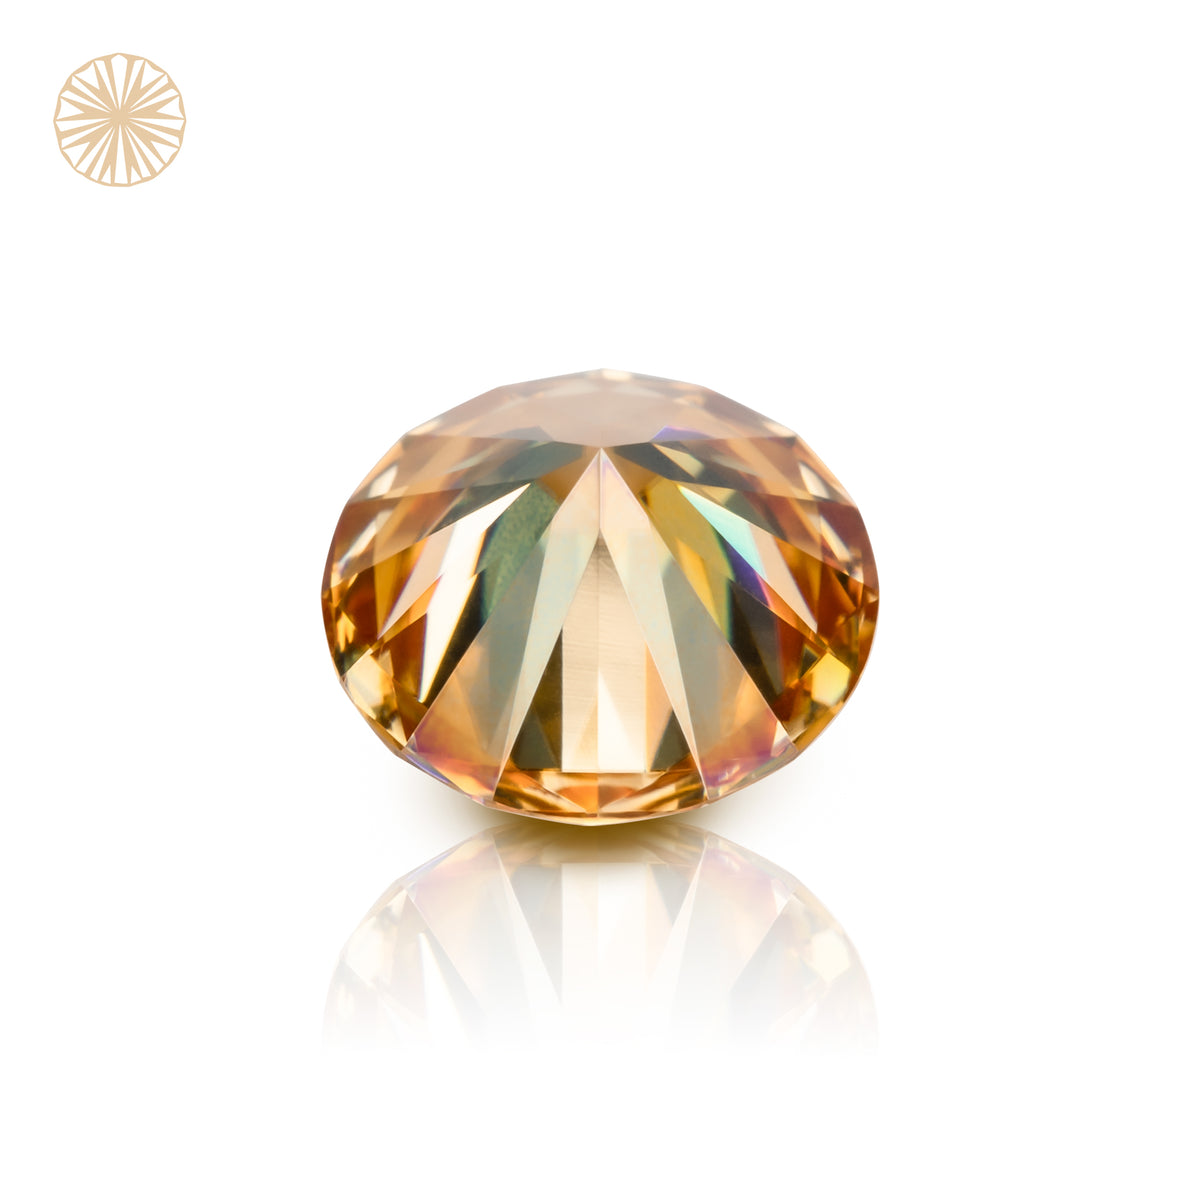 Golden Imperial Brilliant Cut Round Shape Moissanite Diamond Loose Gemstones GRA Certified Vivid Yellow VVS1 Moissanite Fancy Cut for Jewelry Making